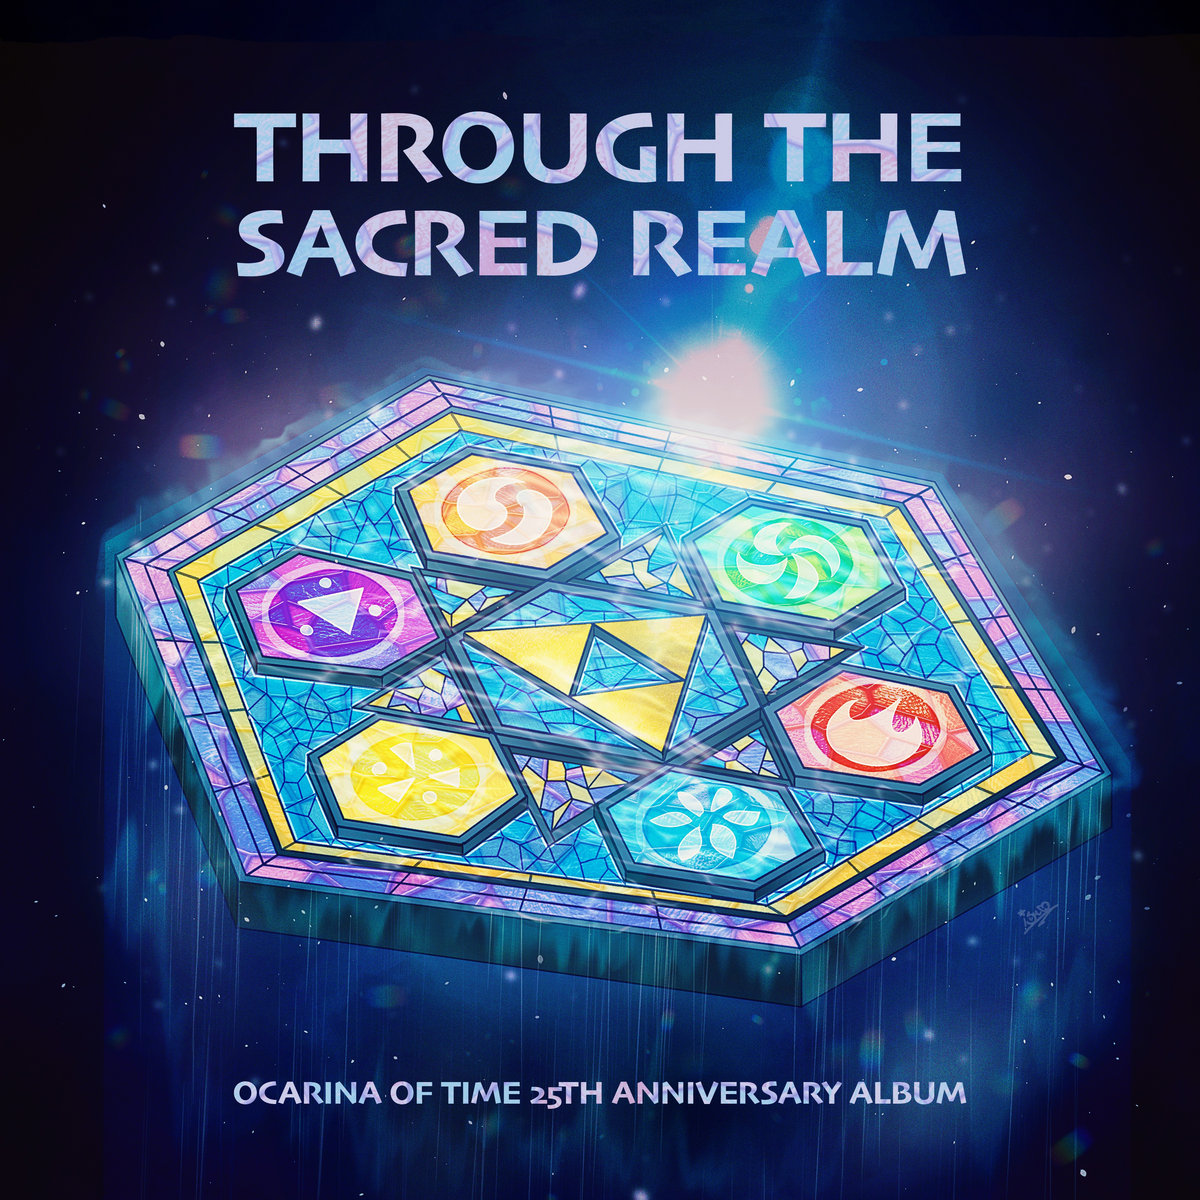 Through the Sacred Realm: Ocarina of Time 25th Anniversary Album